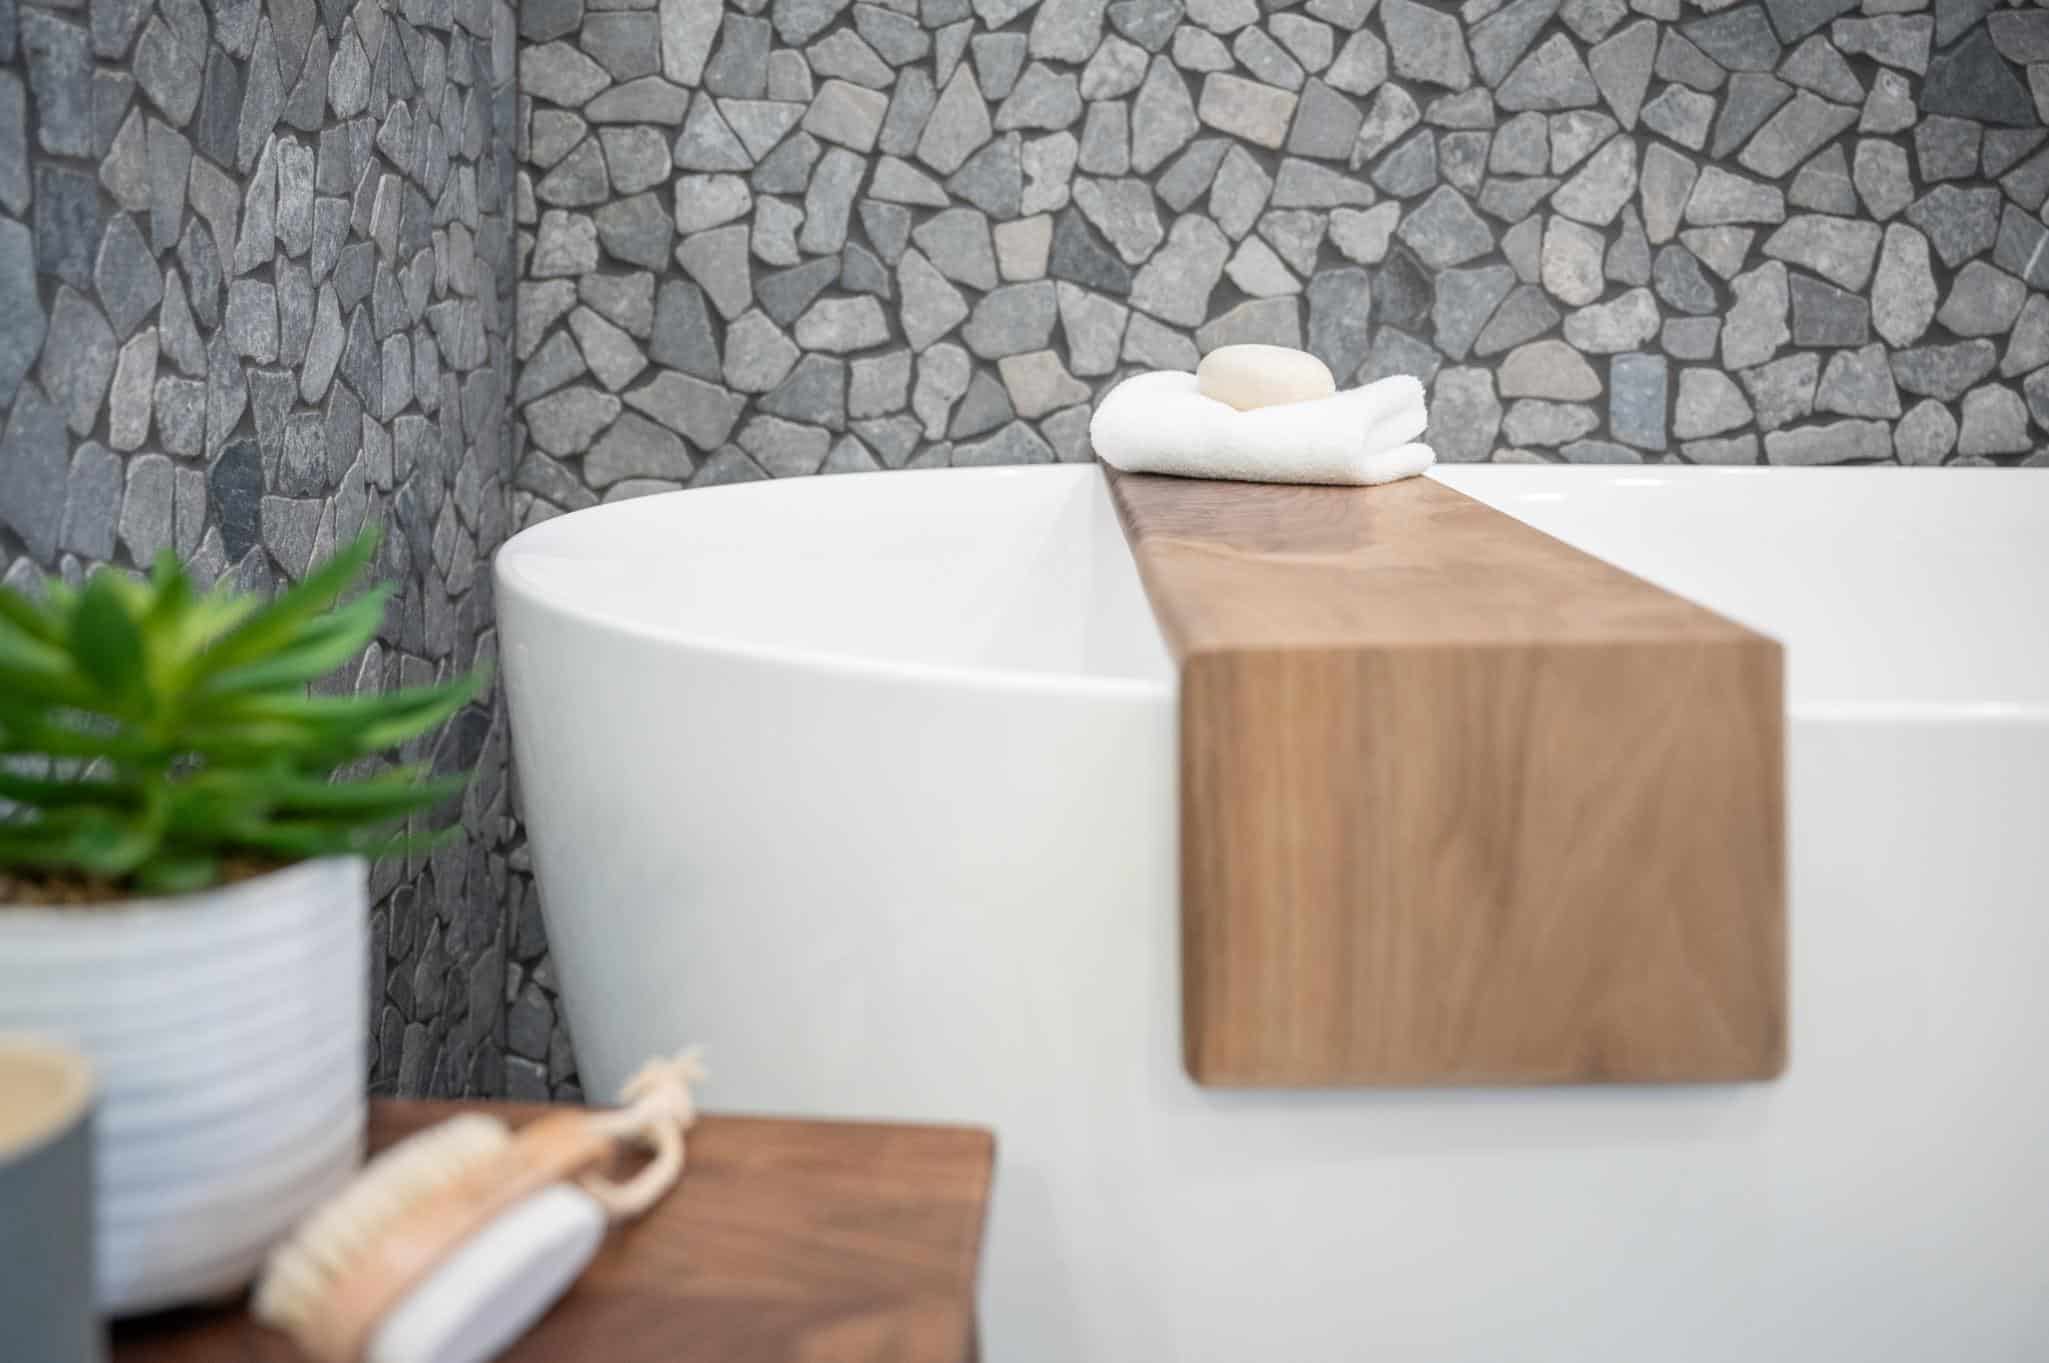 Design a Bathroom That Transports You